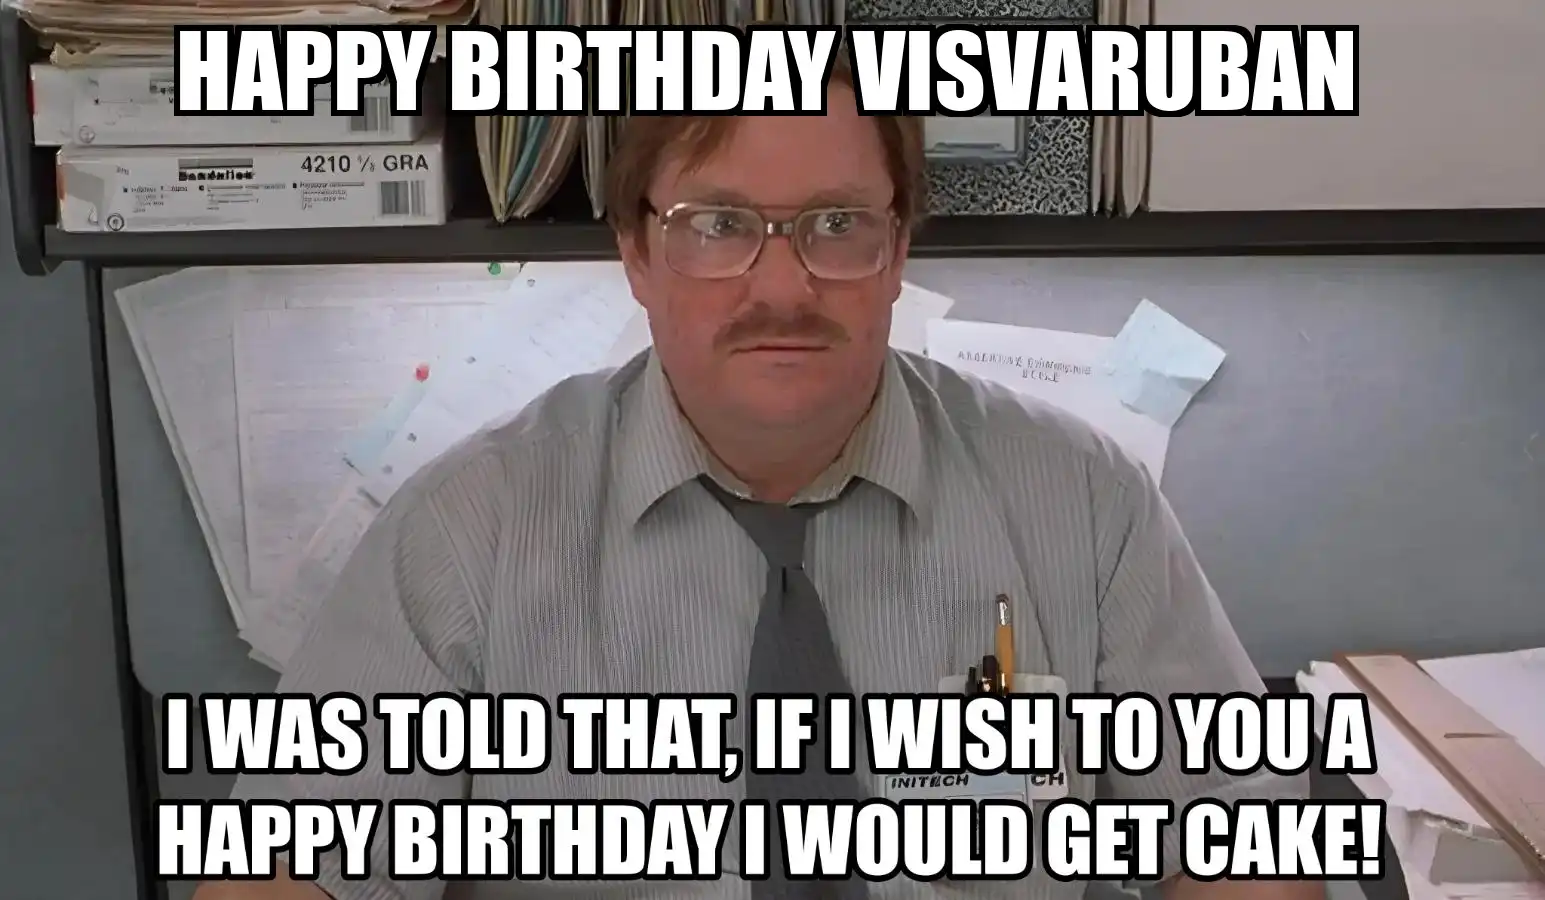 Happy Birthday Visvaruban I Would Get A Cake Meme